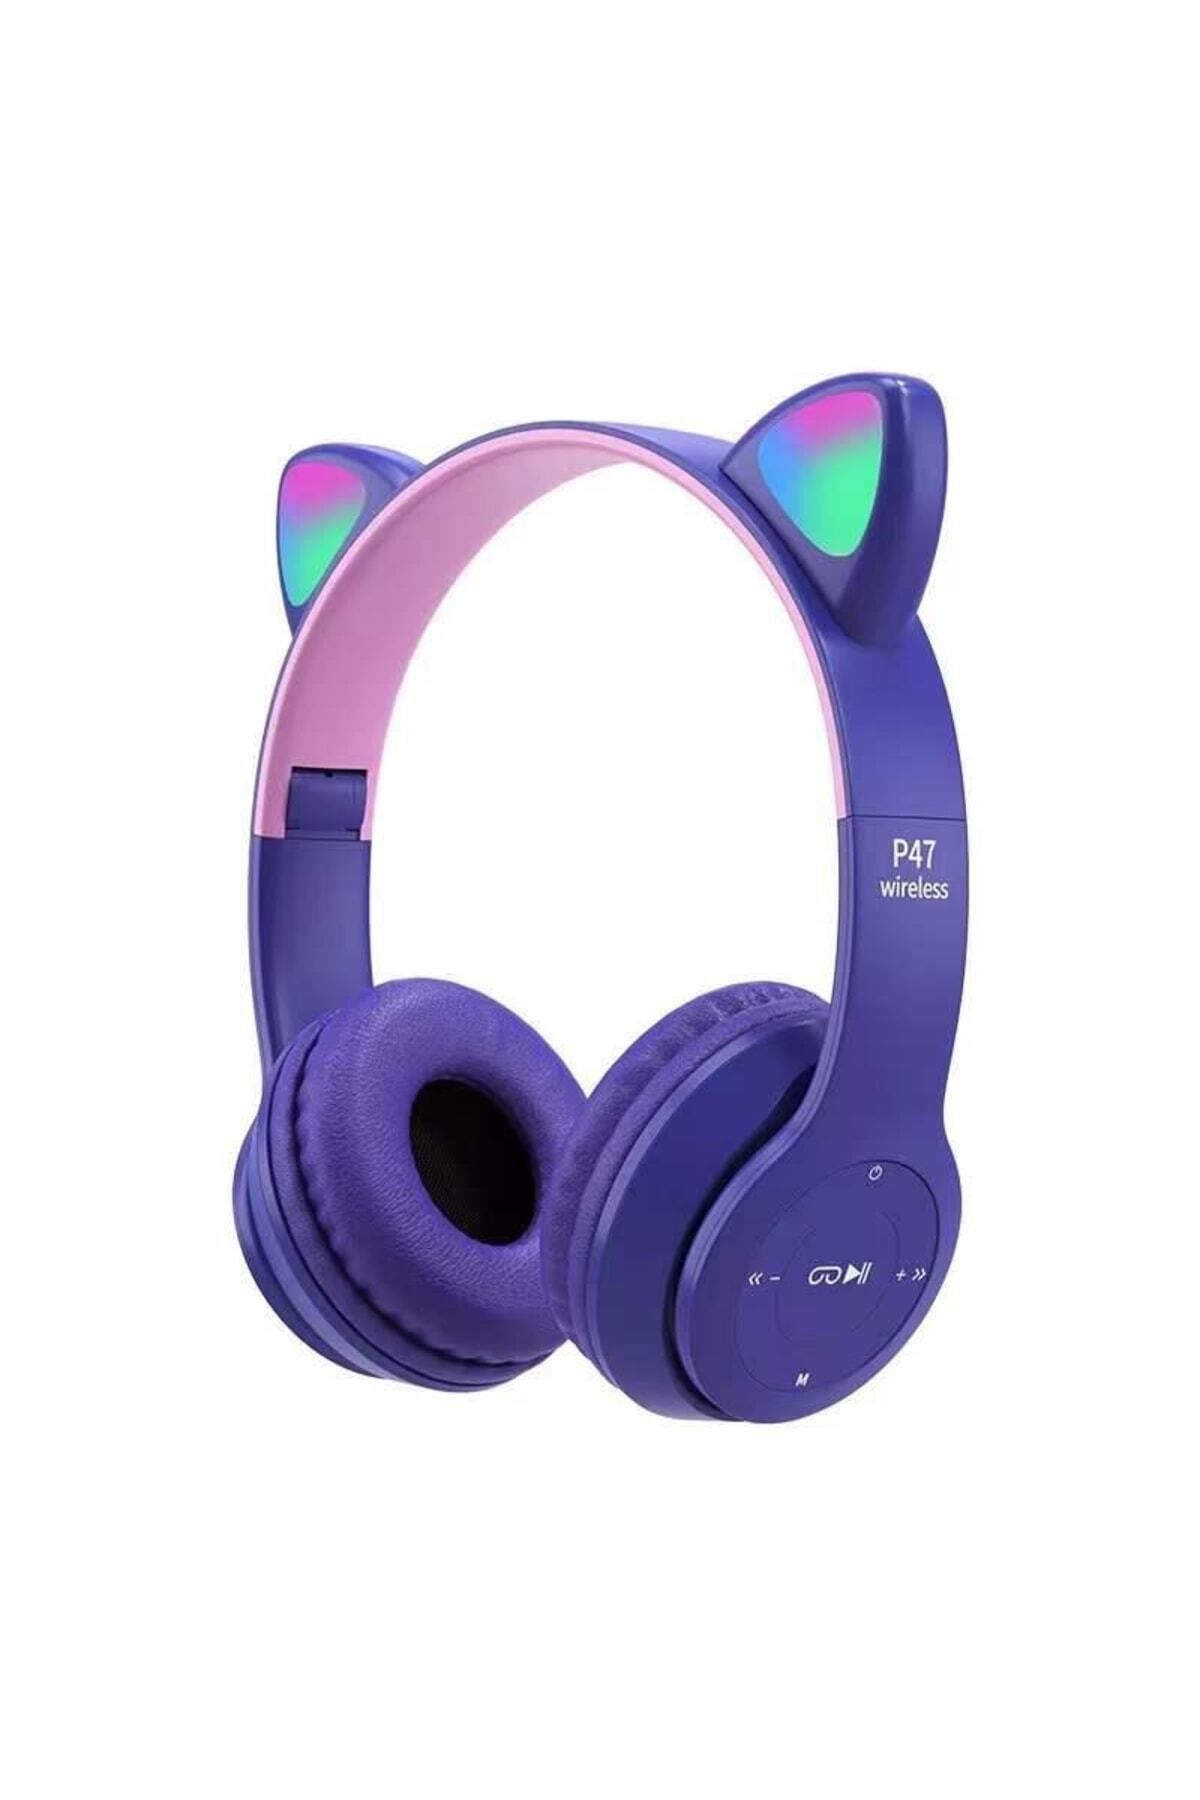 Torima P47m Sevimli Renkli Kedi Kulak Bluetooth Kulaklık Mor